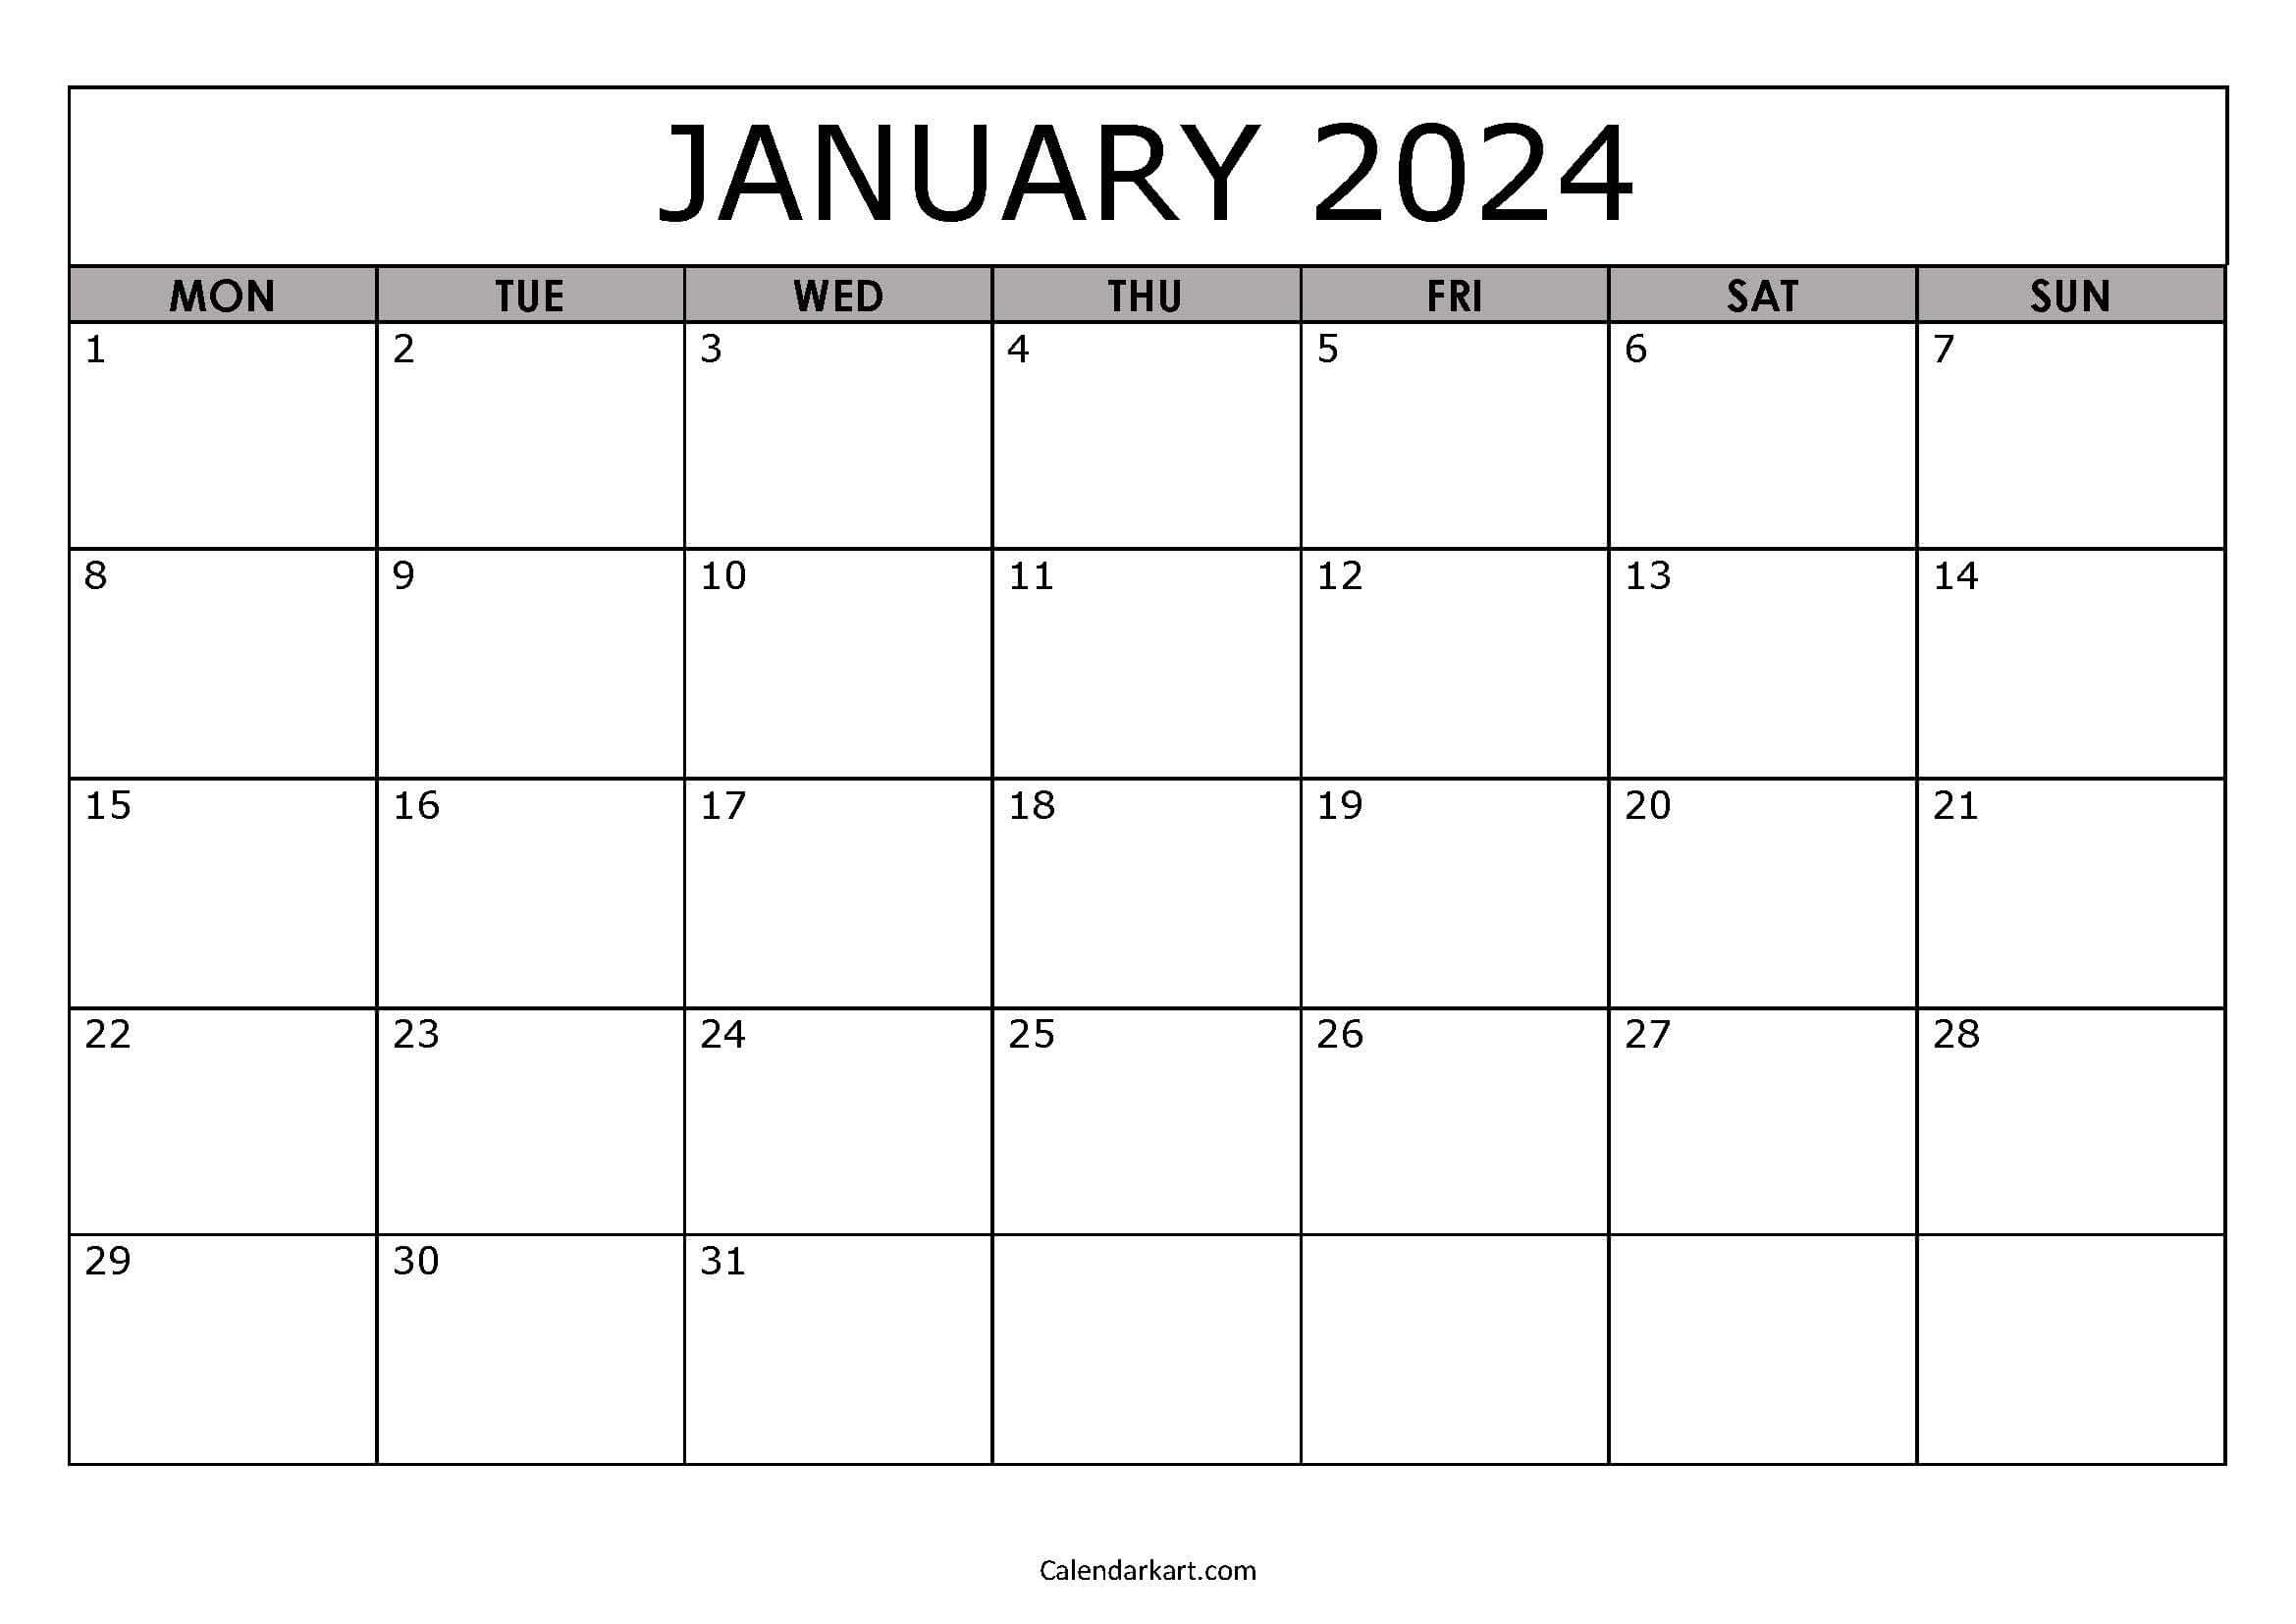 Free Printable January 2024 Calendars - Calendarkart | Free Printable Calendar 2024 Starting Monday